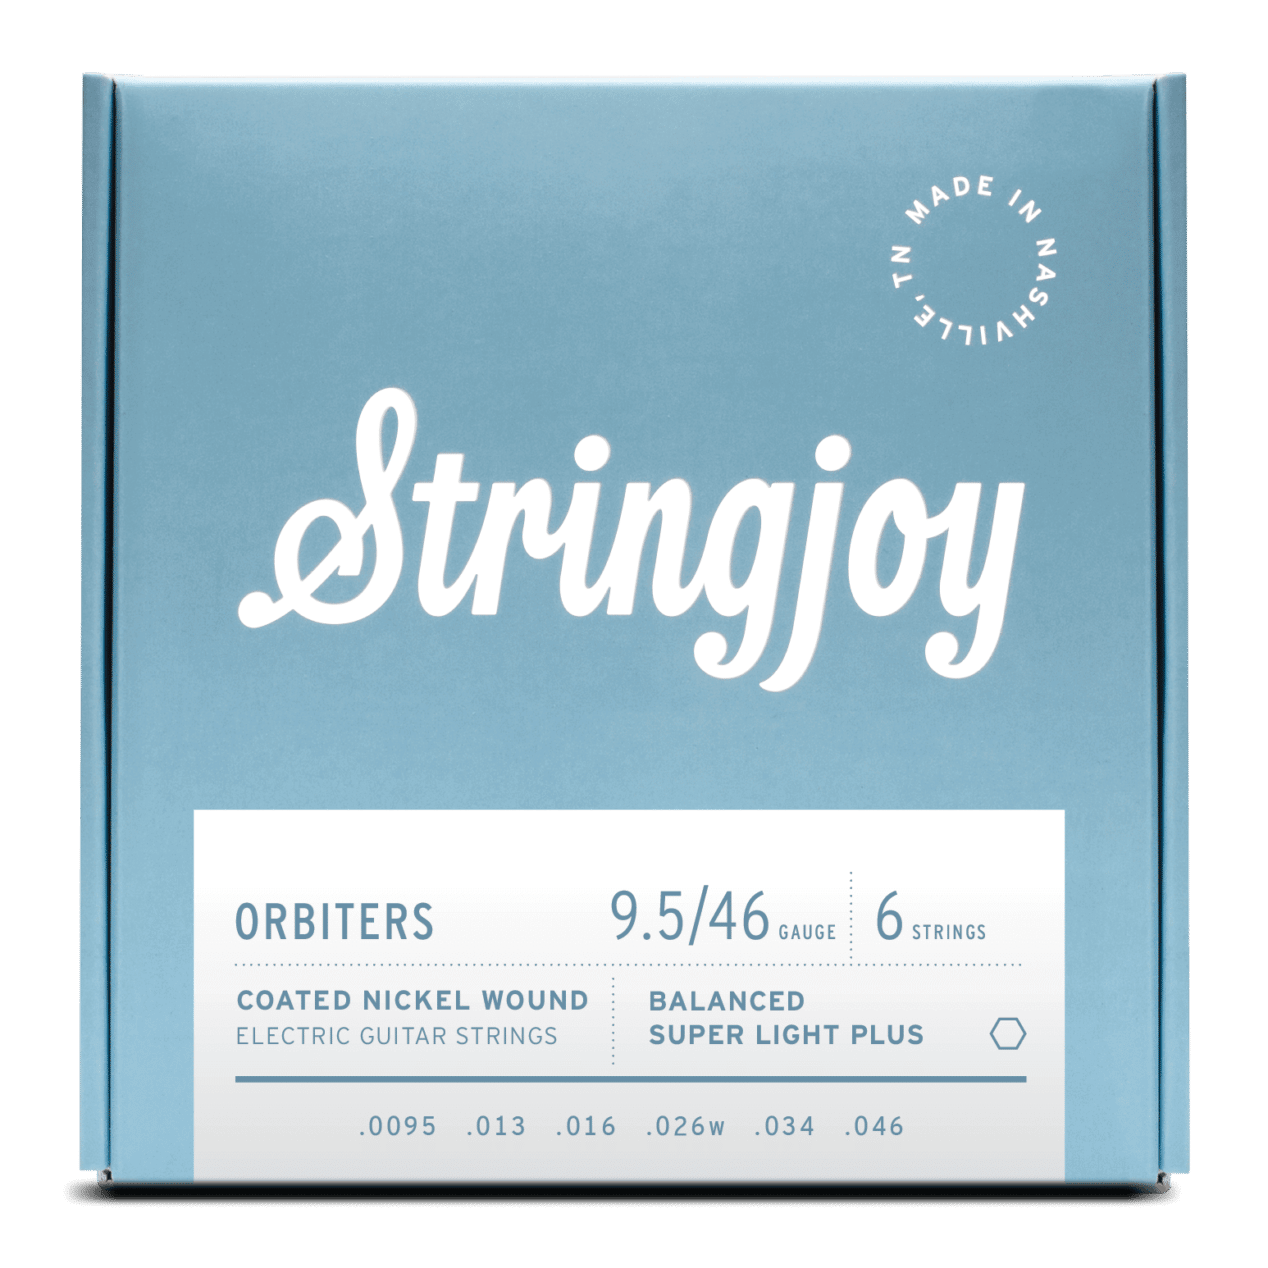 Stringjoy Stringjoy Orbiters | Balanced Super Light Plus Gauge (9.5-46) Coated Nickel Wound Electric Guitar Strings